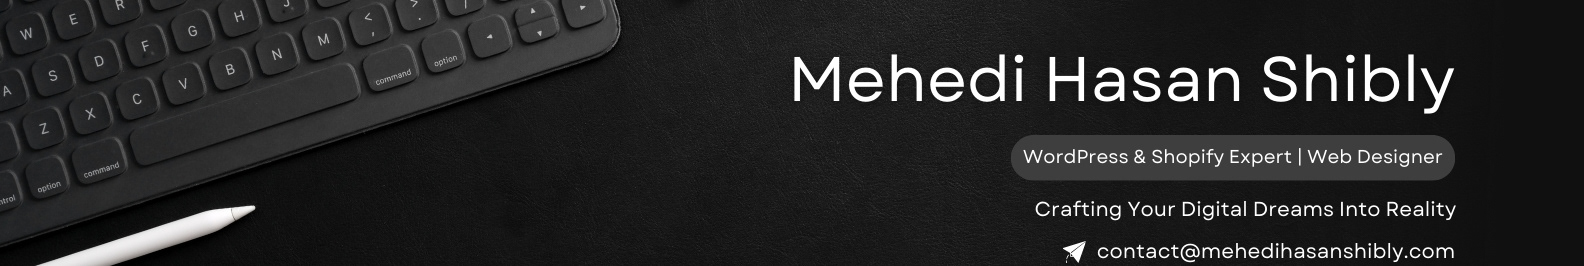 Mehedi Hasan Shibly's profile banner